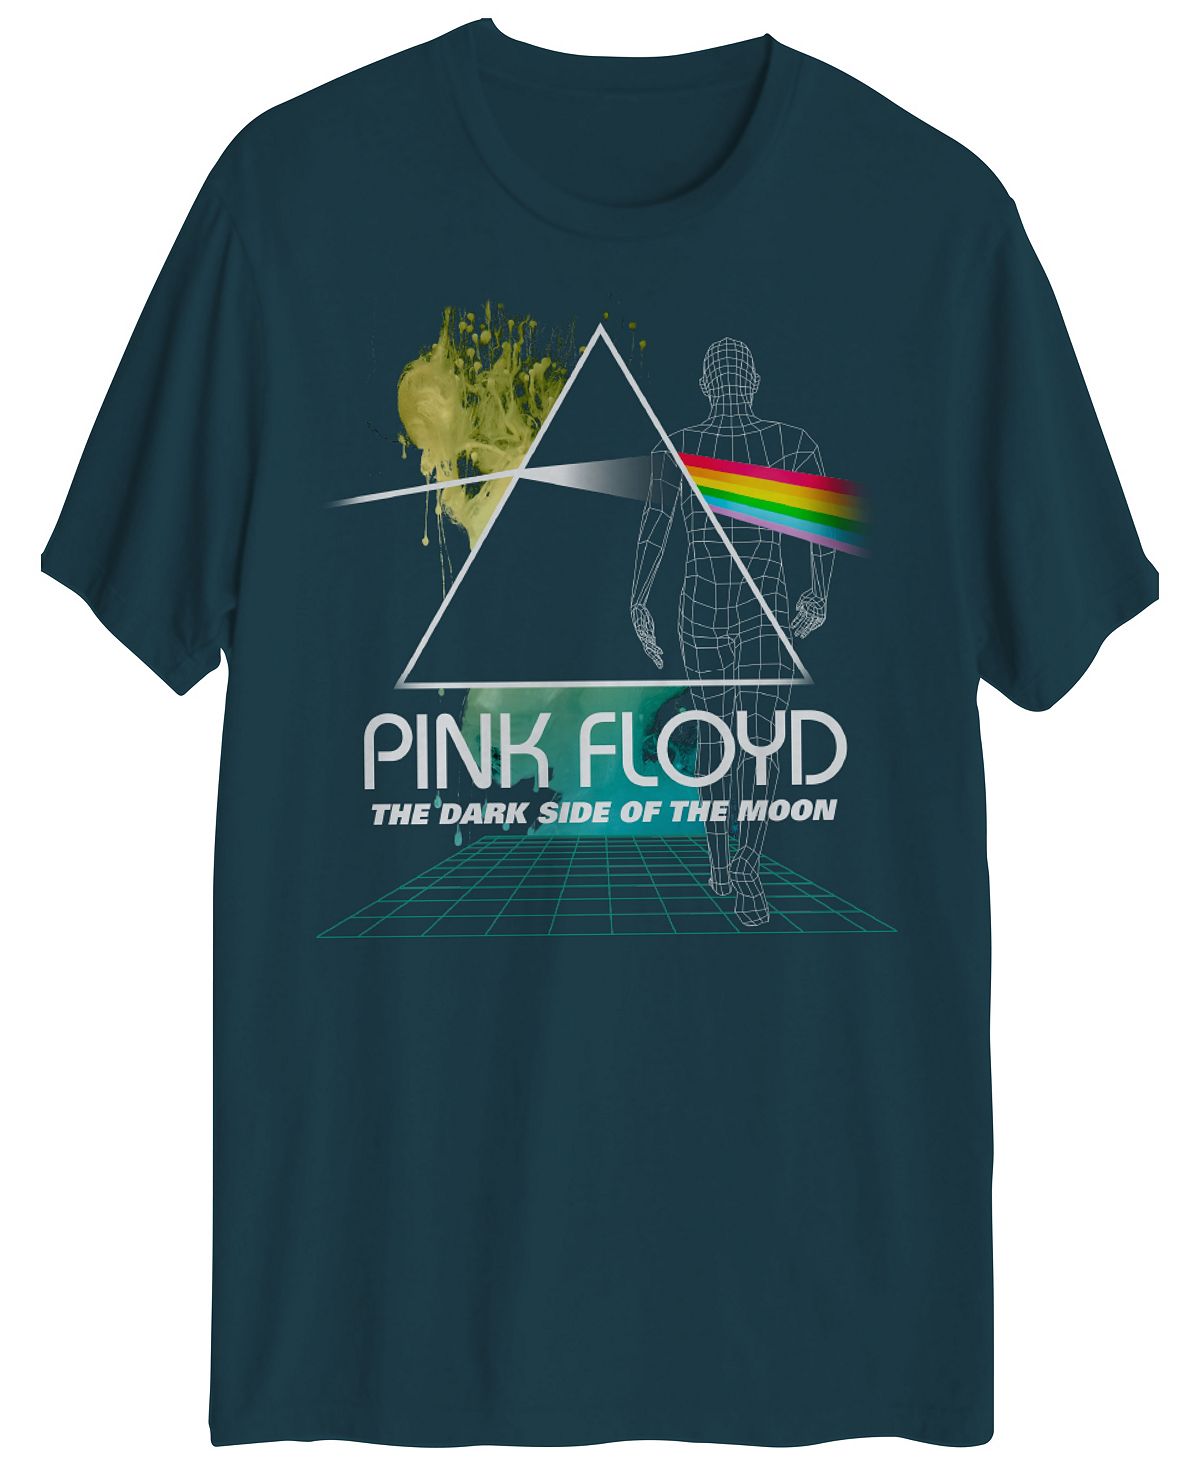 Мужская футболка Pink Floyd с короткими рукавами Hybrid warner music pink floyd the dark side of the moon